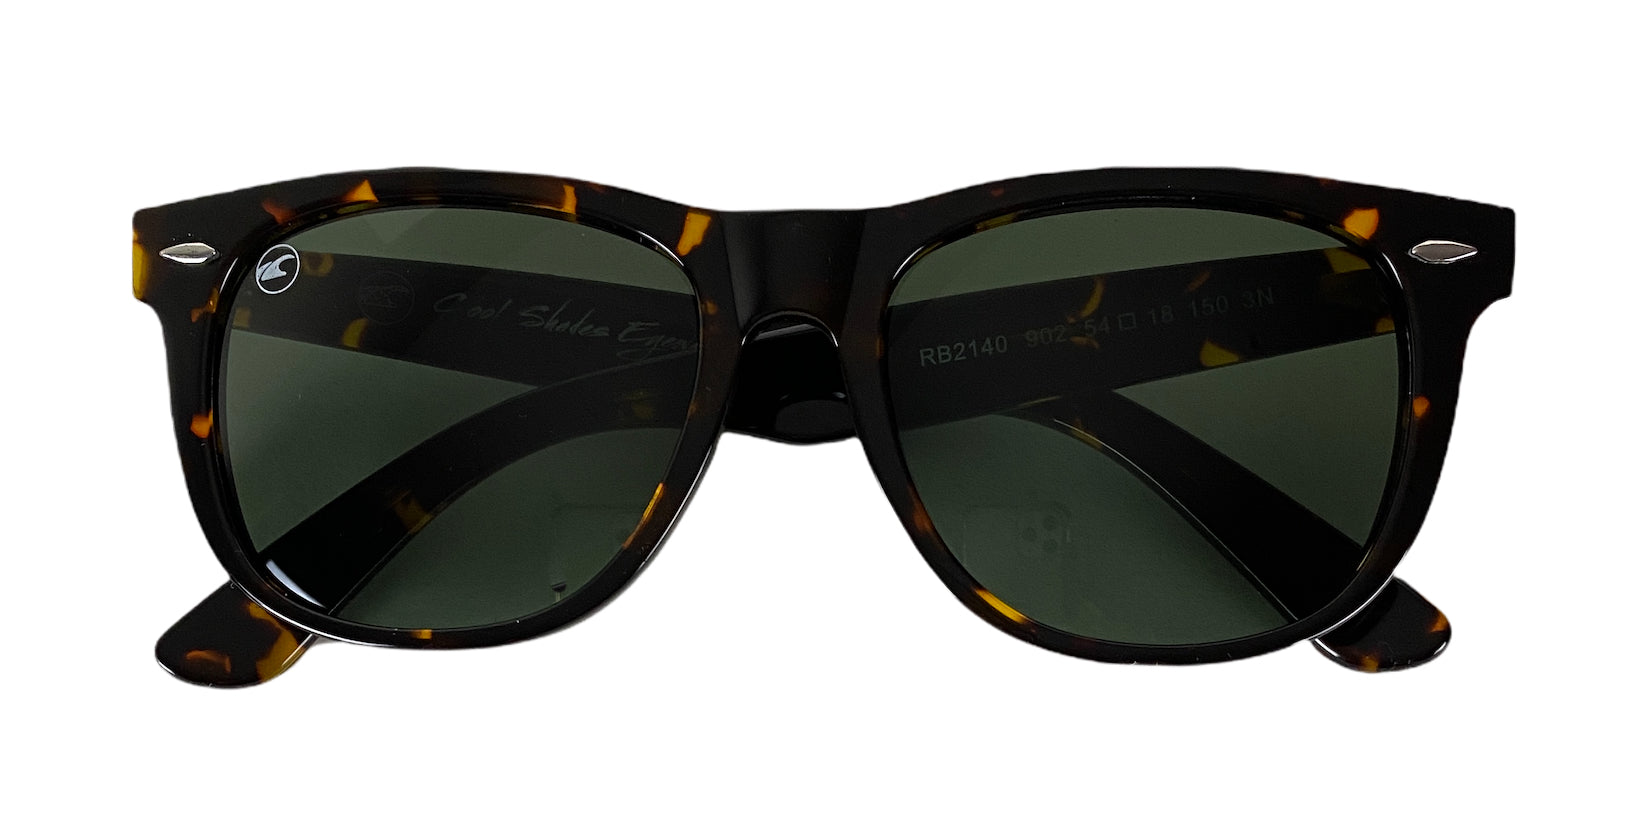 Sielo Adult Sunglasses - Brun Tortoise+Bronze / Taille Unique